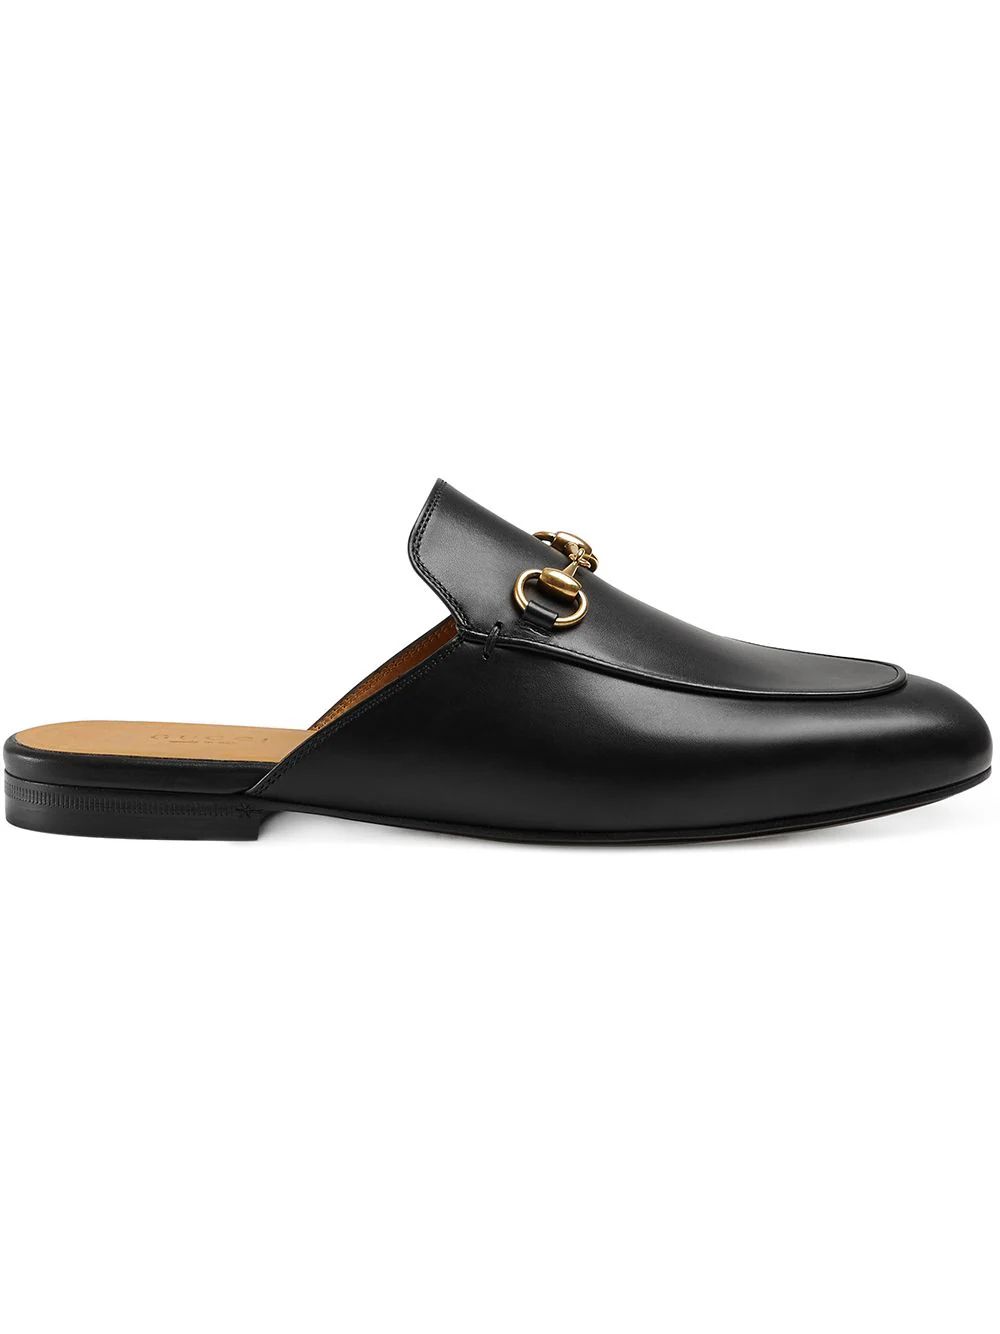 Gucci Princetown leather slipper - Black | FarFetch US